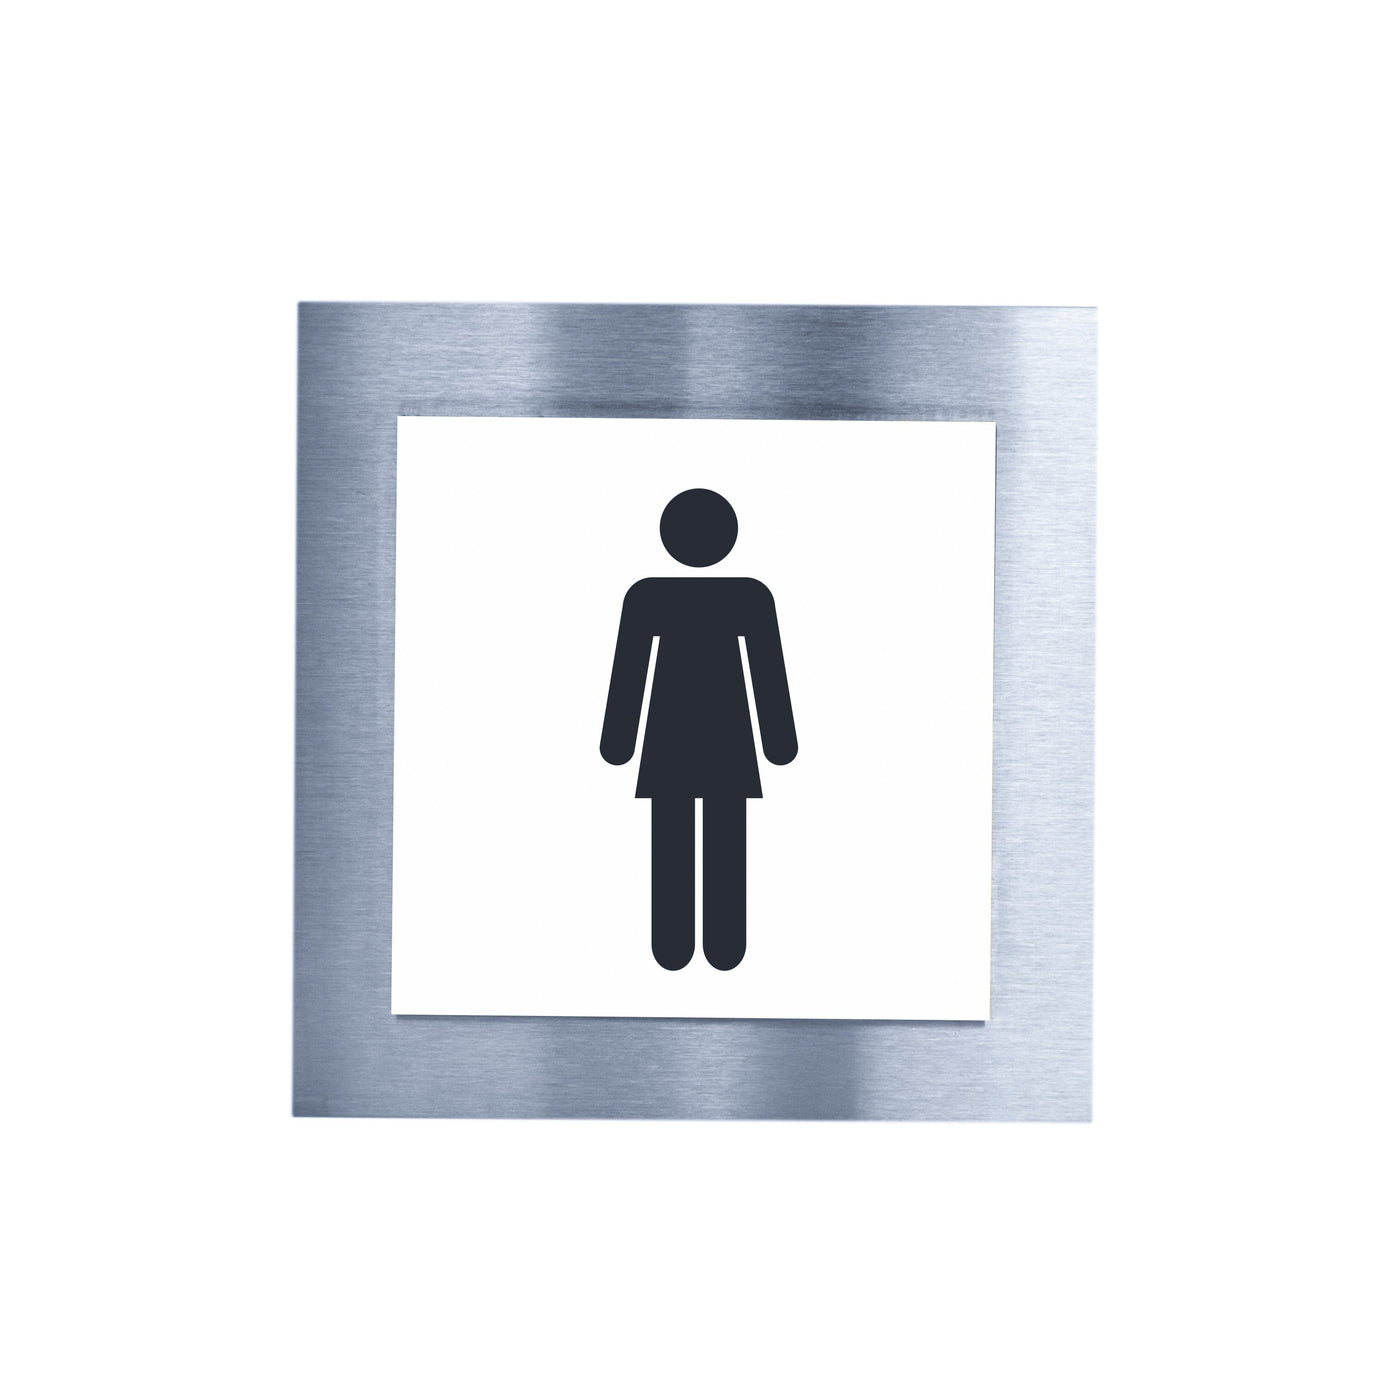 Steel Women Restroom Signs Bathroom Signs white / black pictogram Bsign